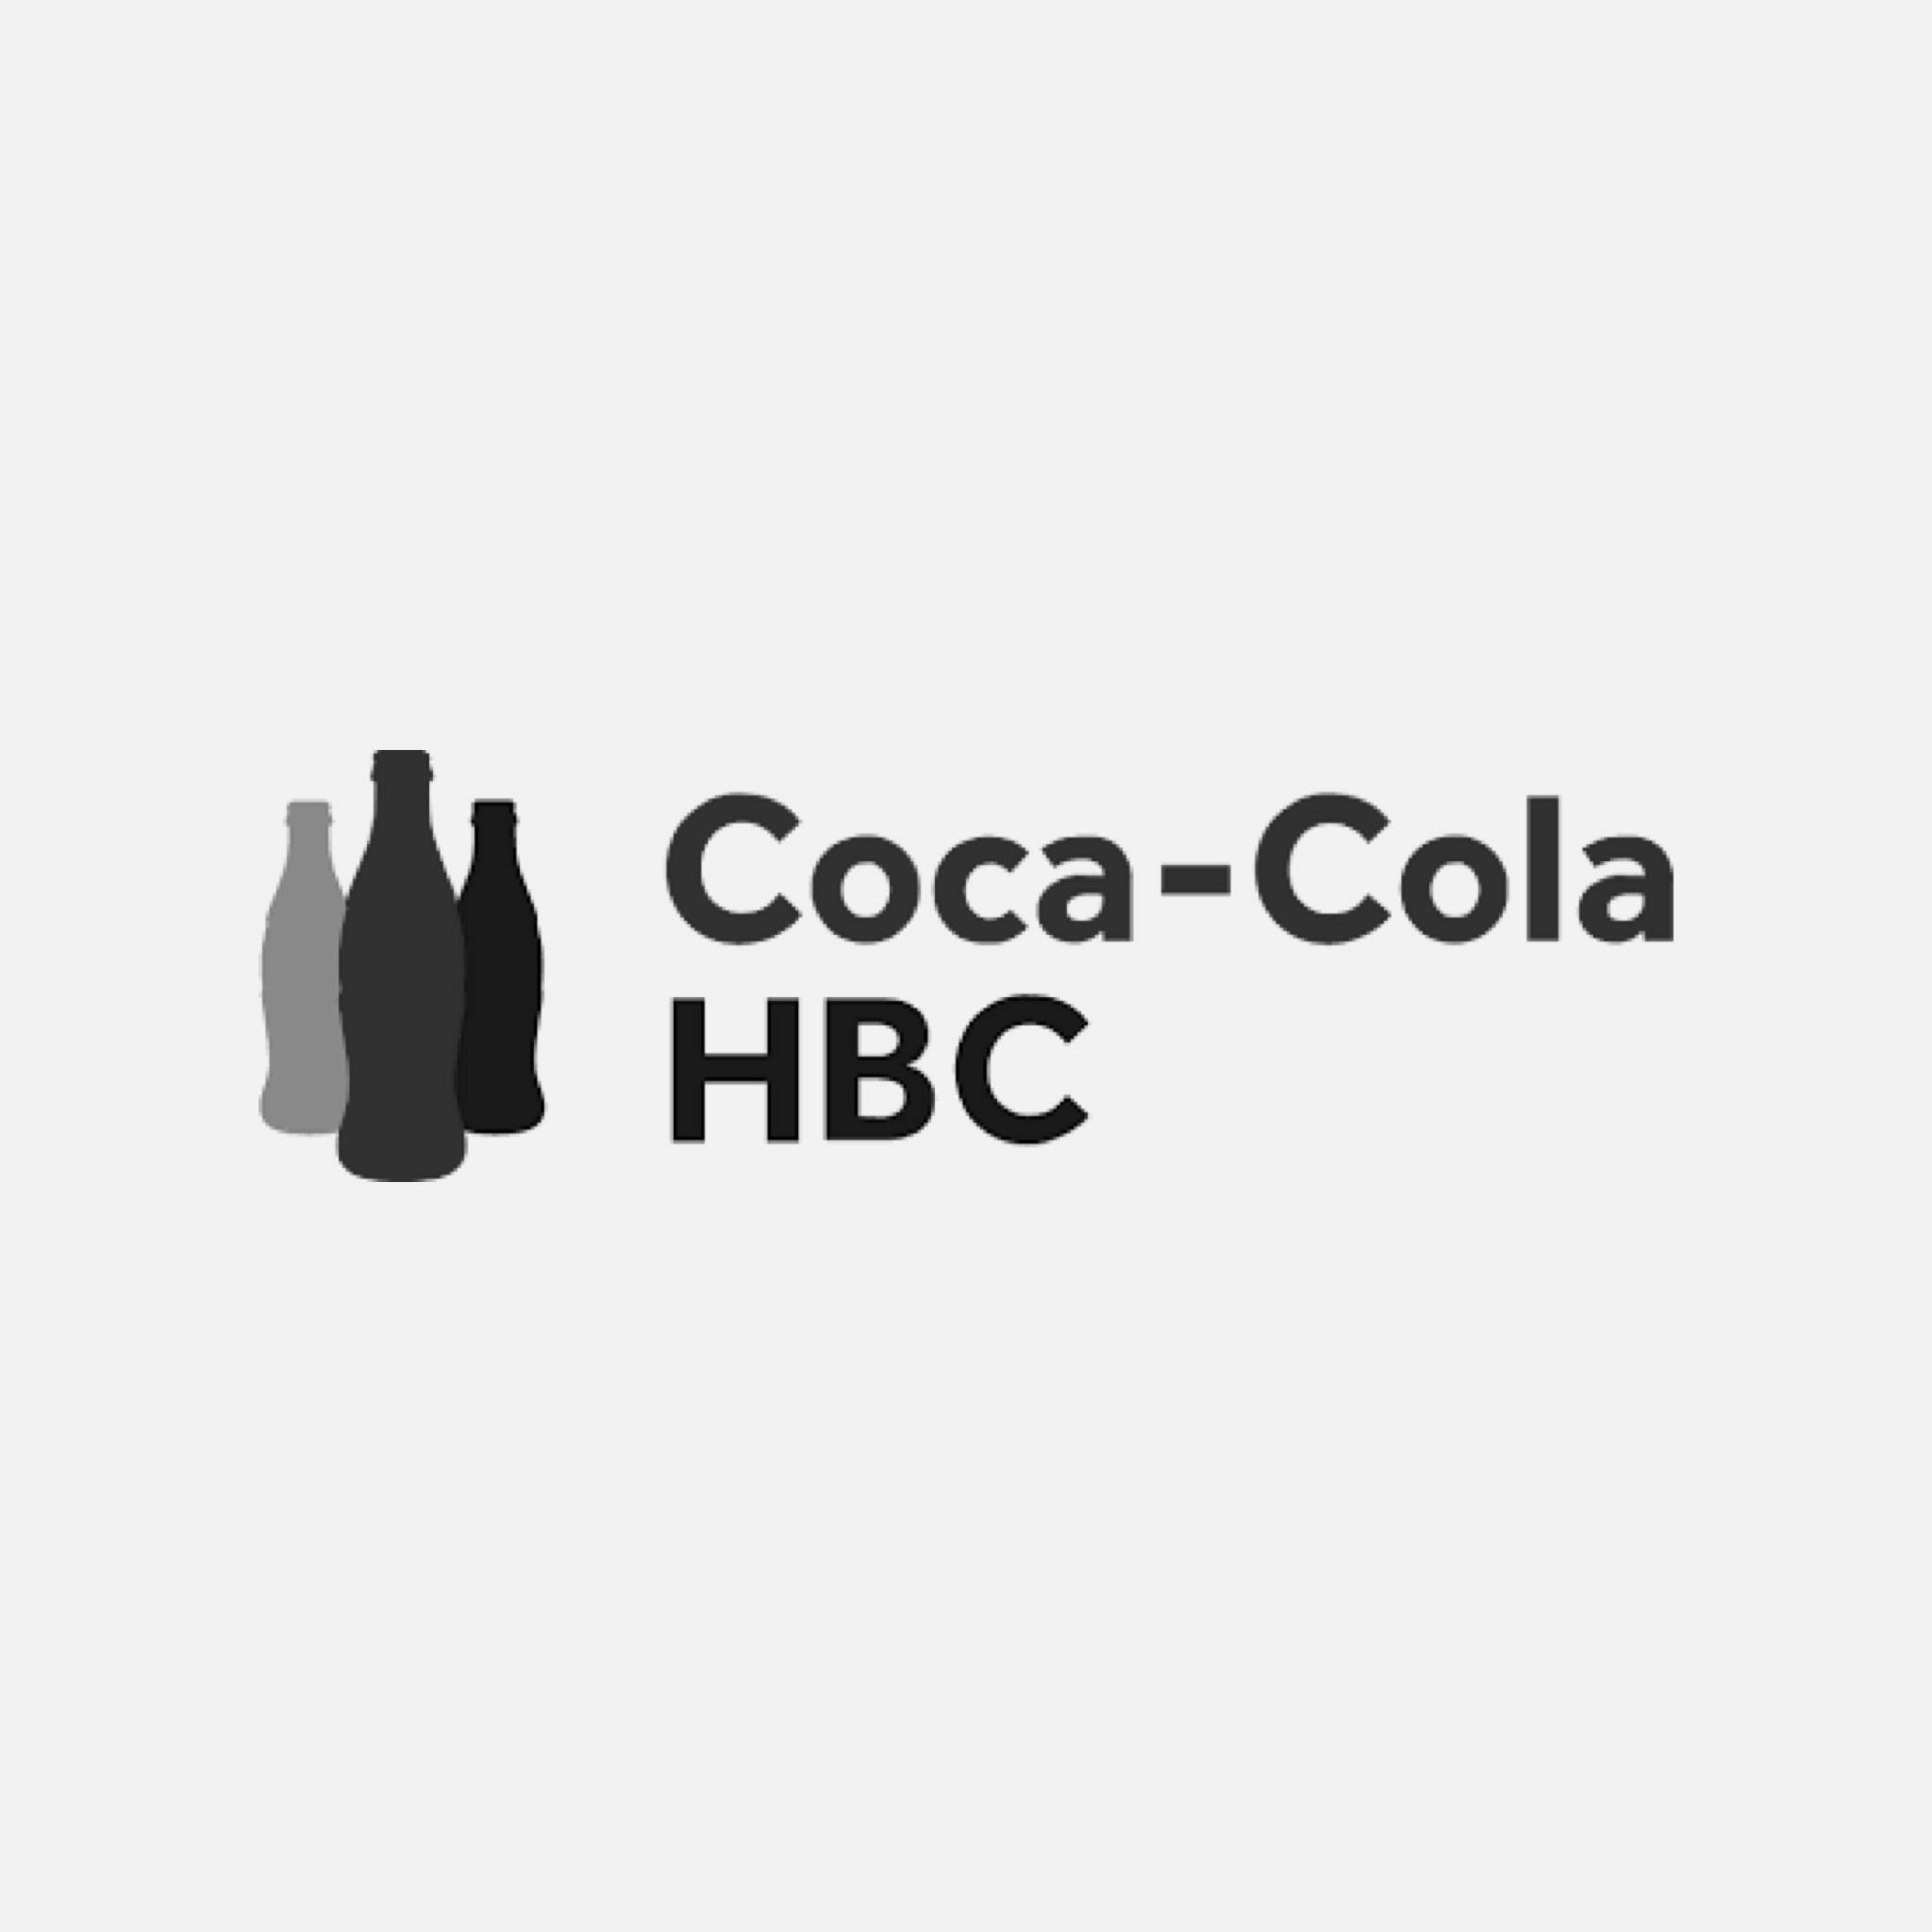 295-coca-cola-bw-1-16479410463709.jpg